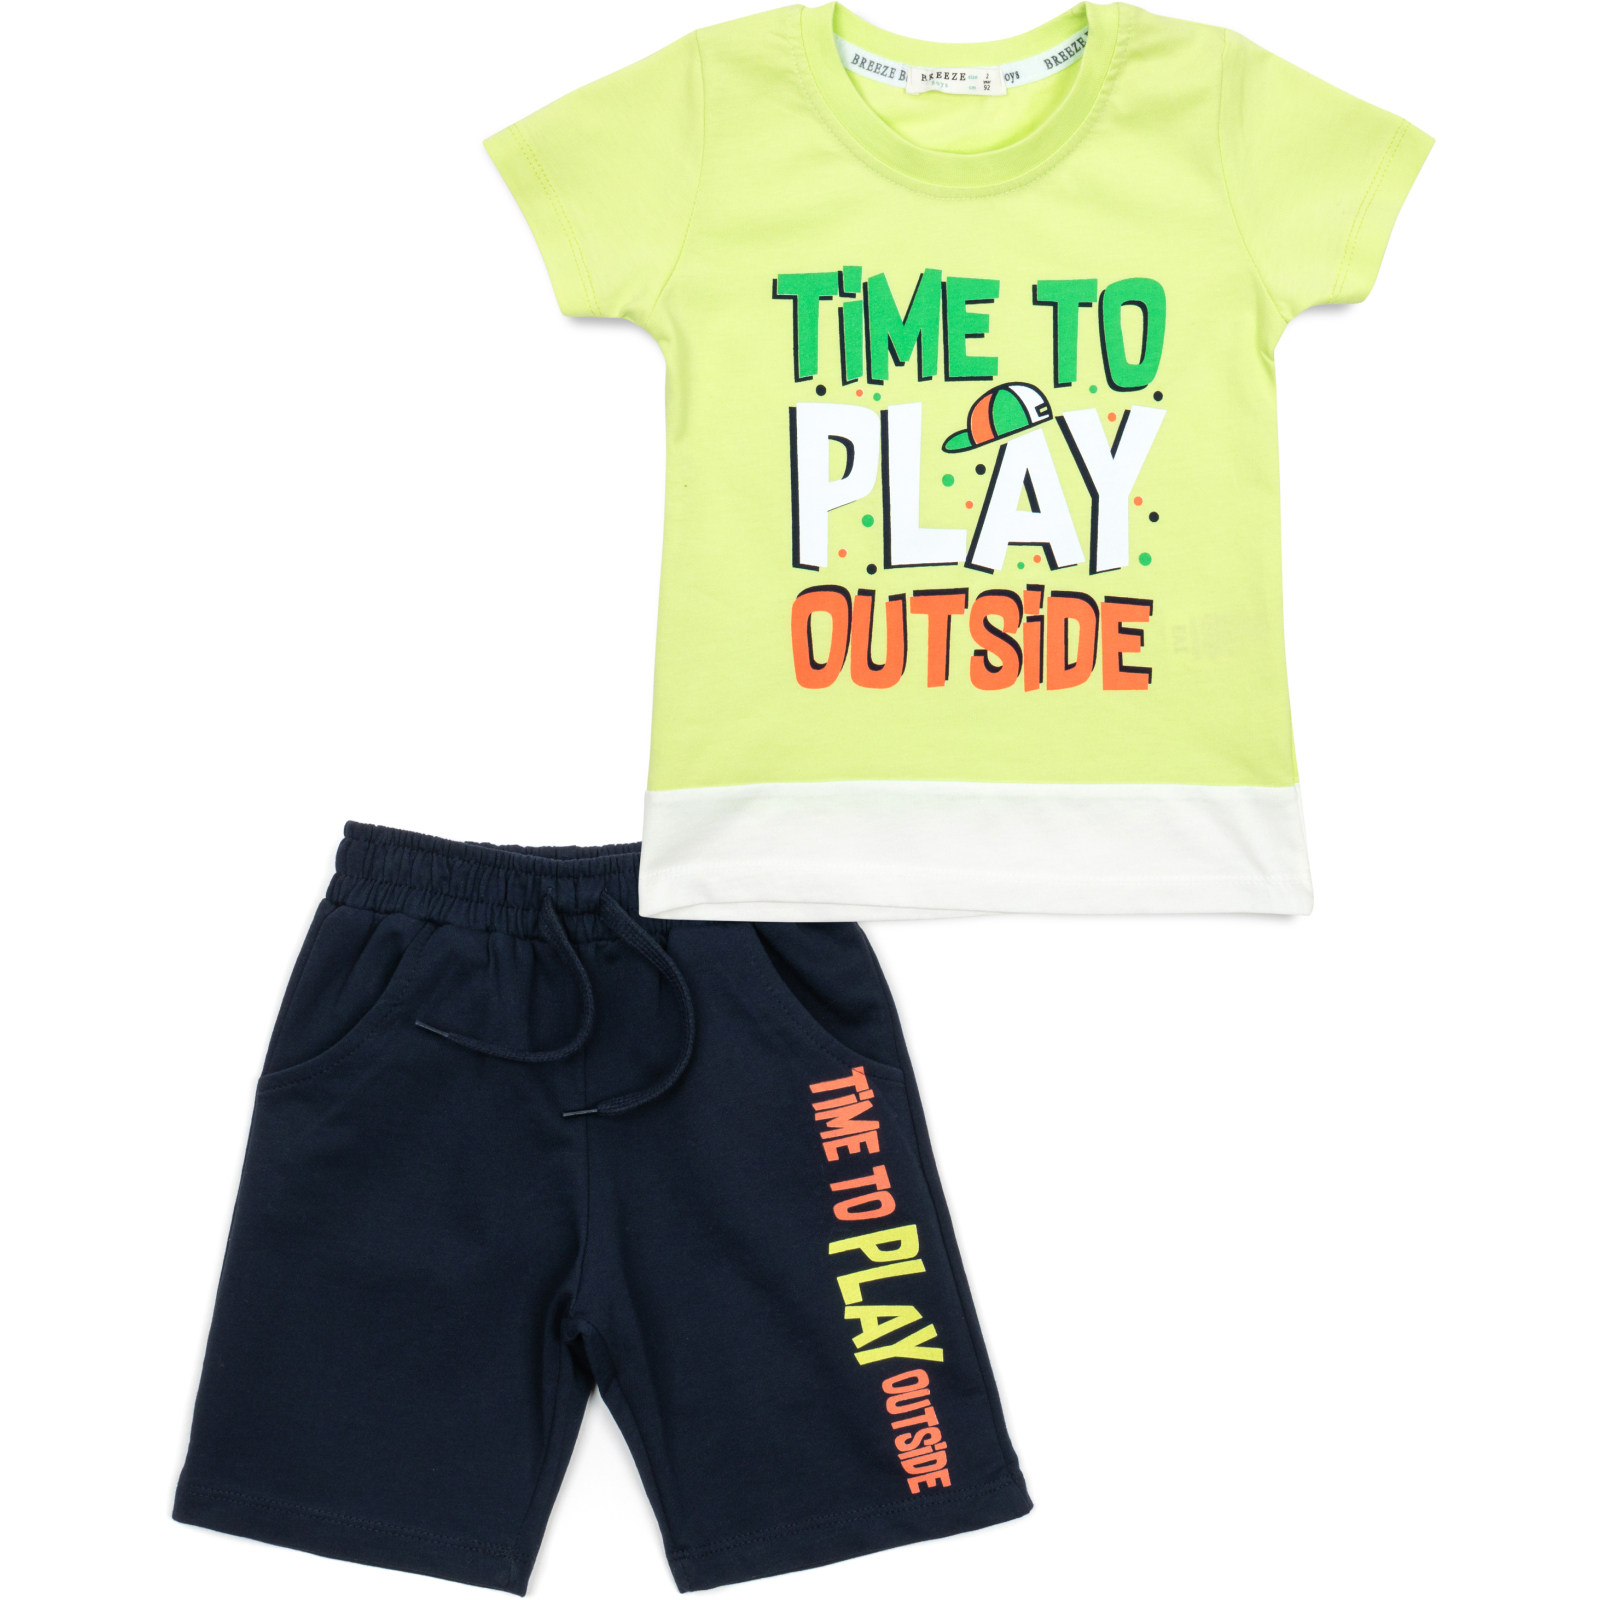 Набор детской одежды Breeze TIME TO PLAY OUTSIDE (14591-110B-green)